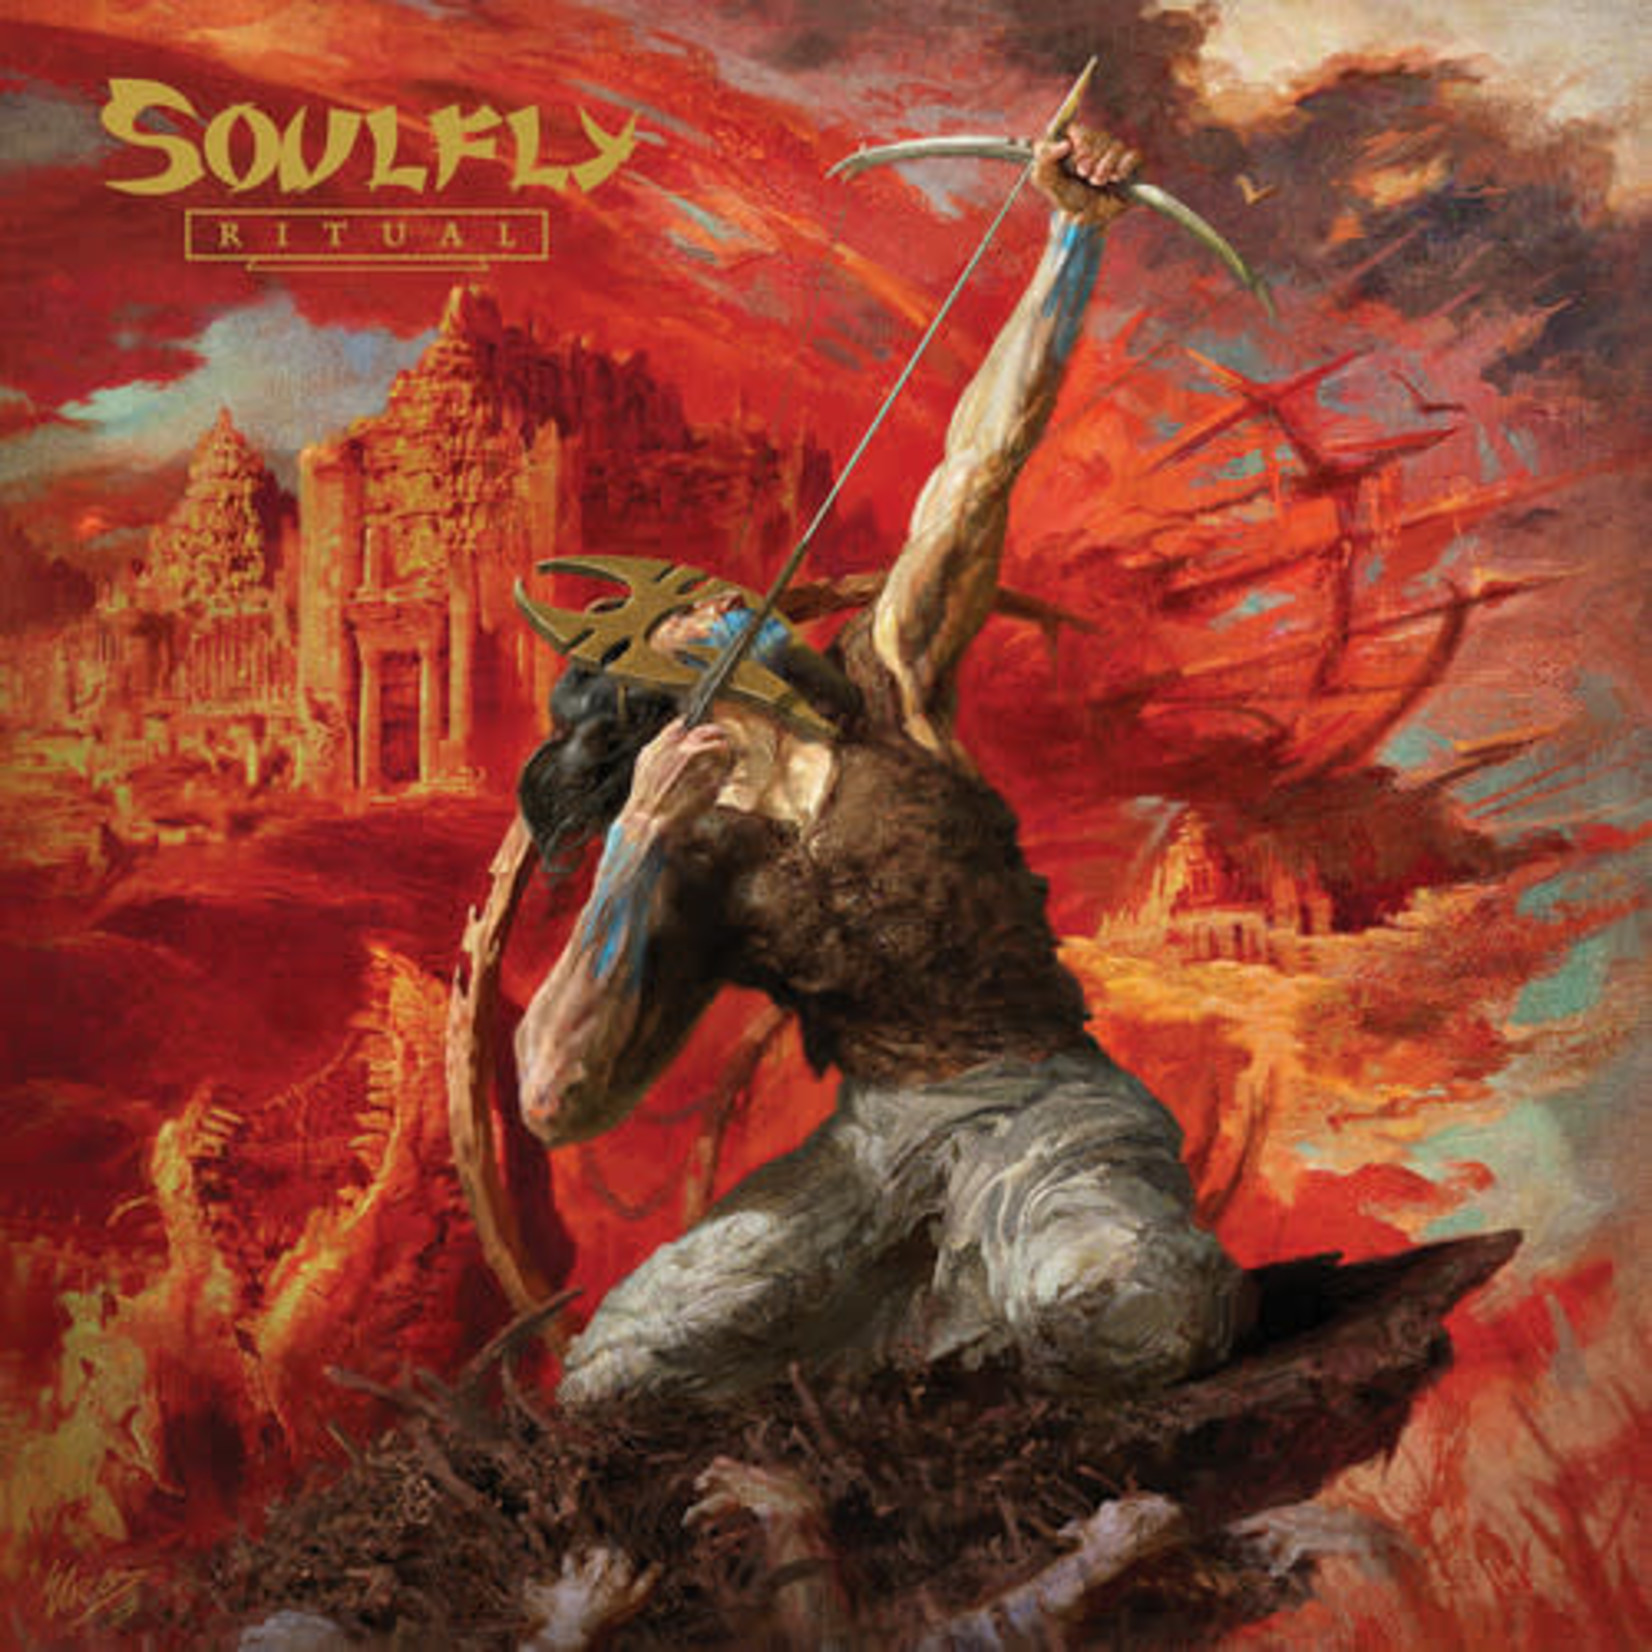 Soulfly - Ritual [CD]